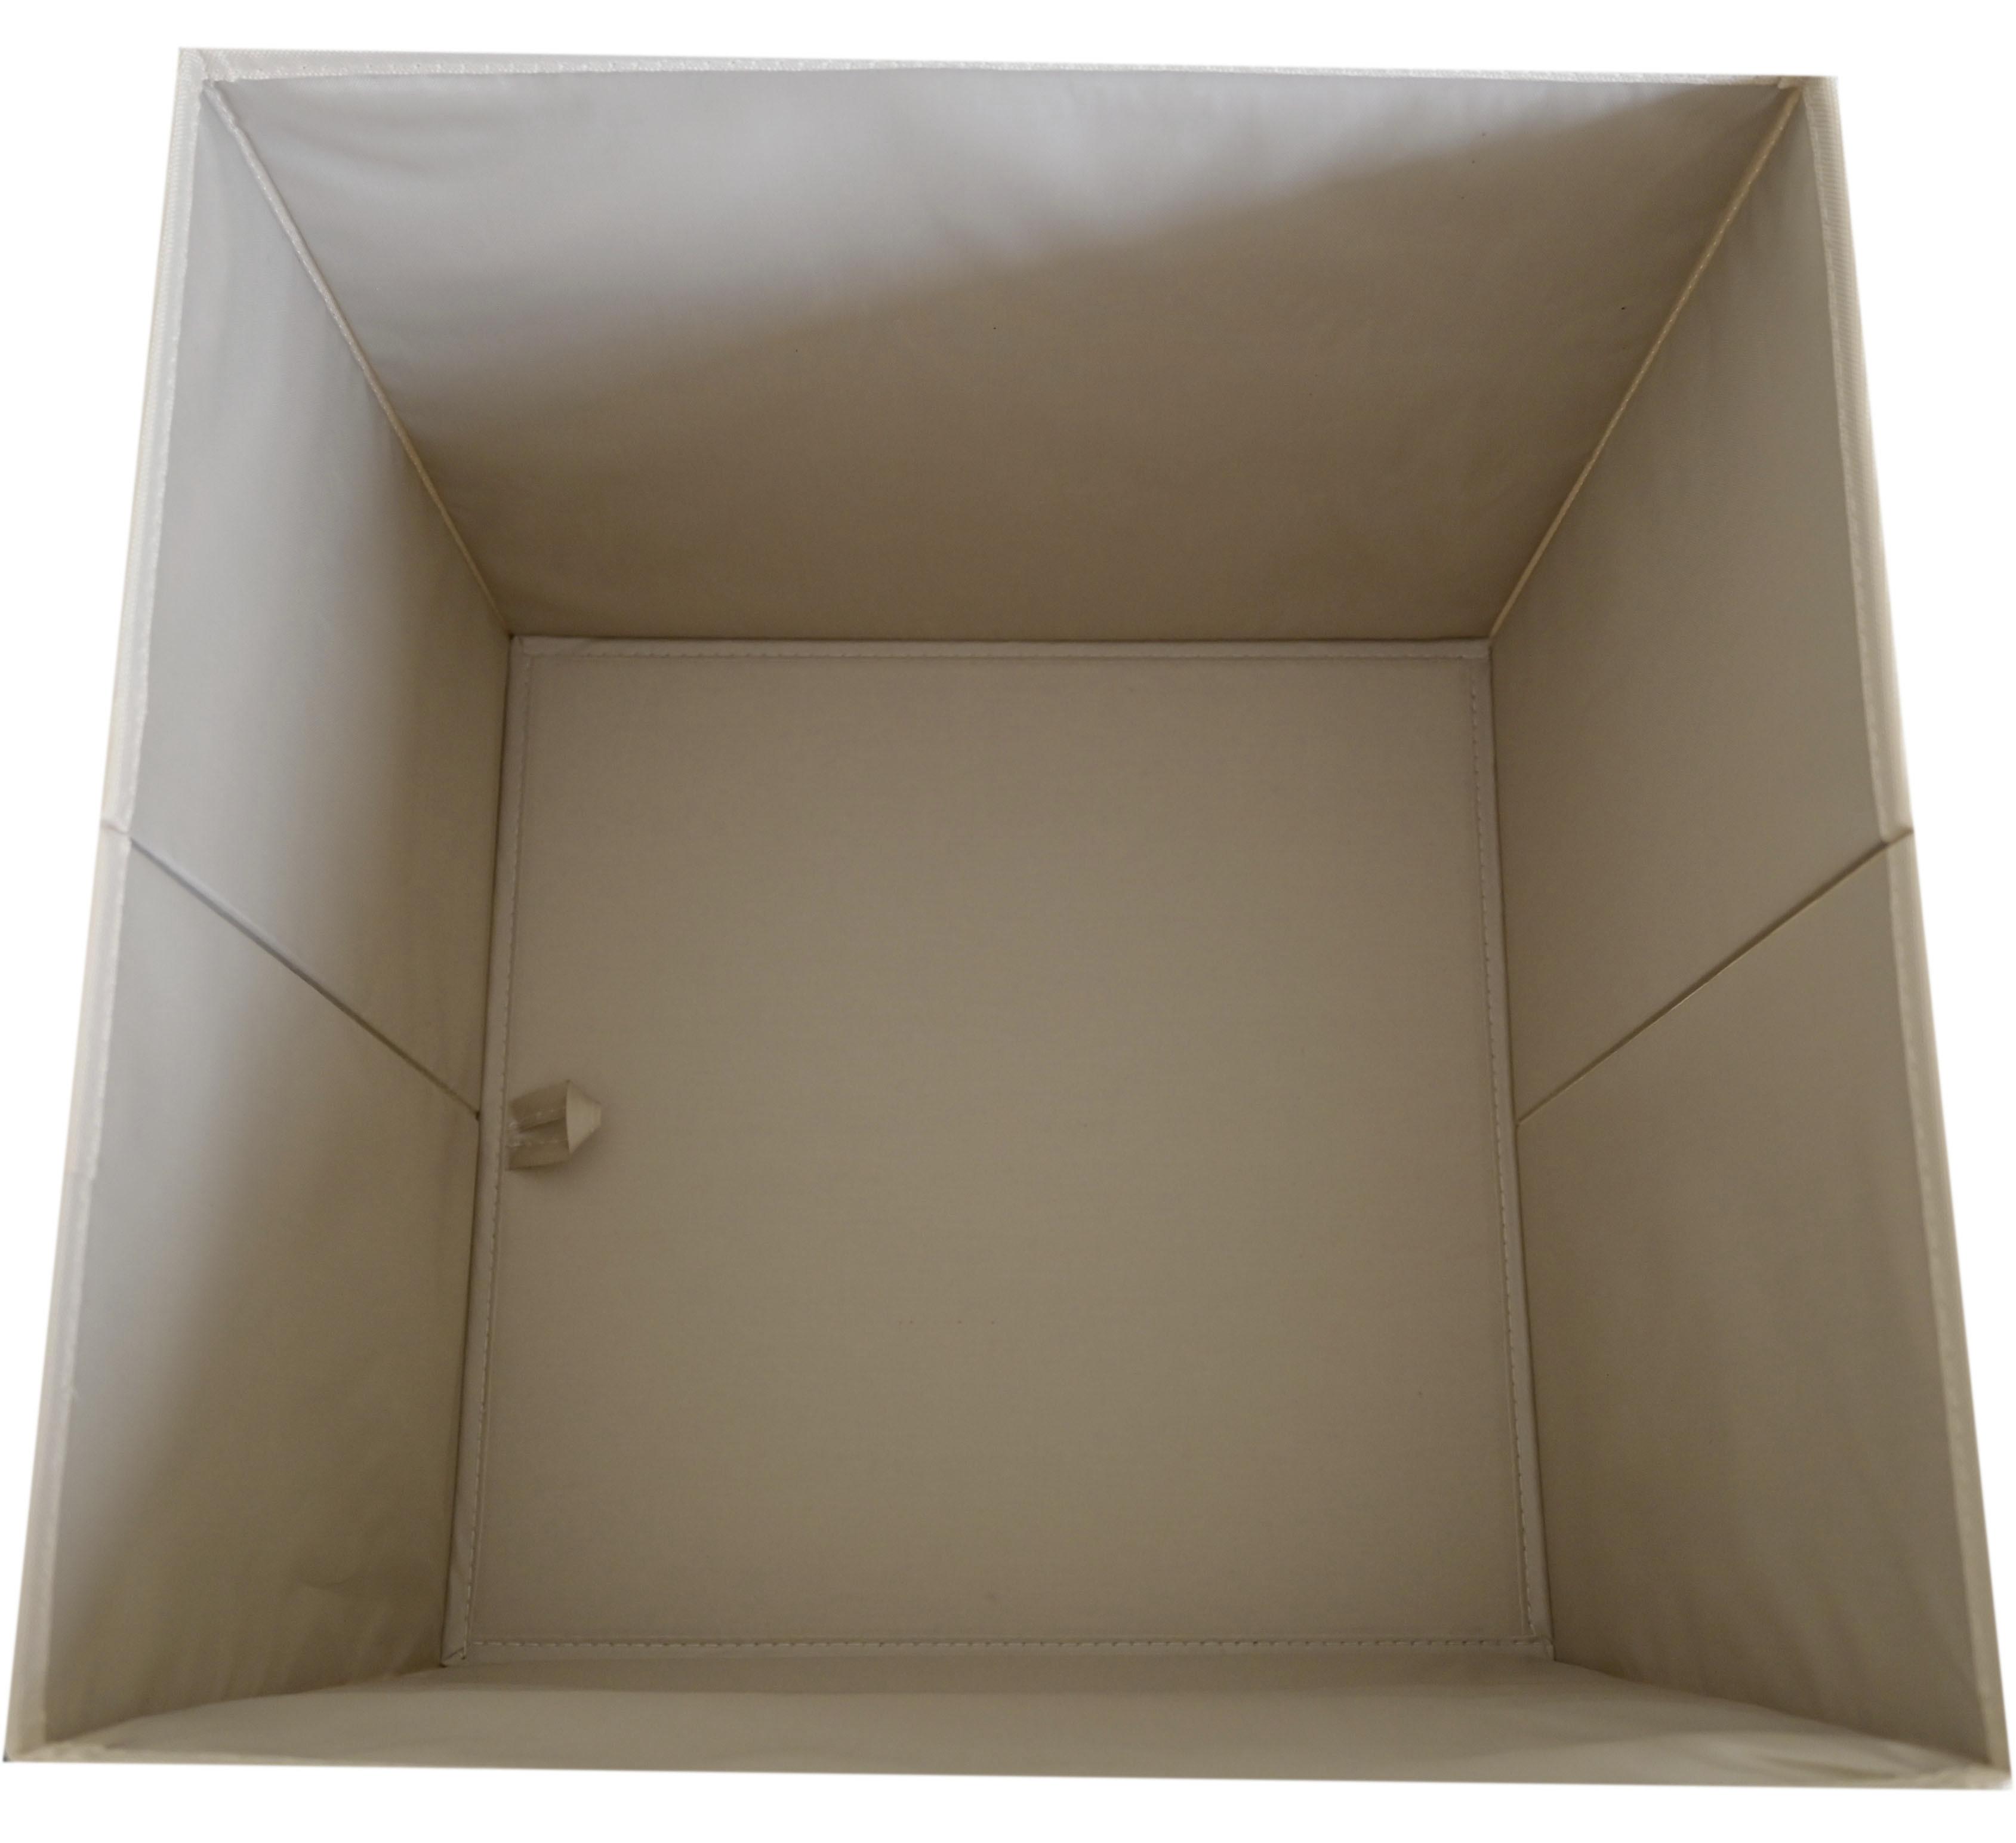 Skladací Box Peter - Ca. 34l -Ext- - krémová, kartón/textil (33/32/33cm) - Modern Living